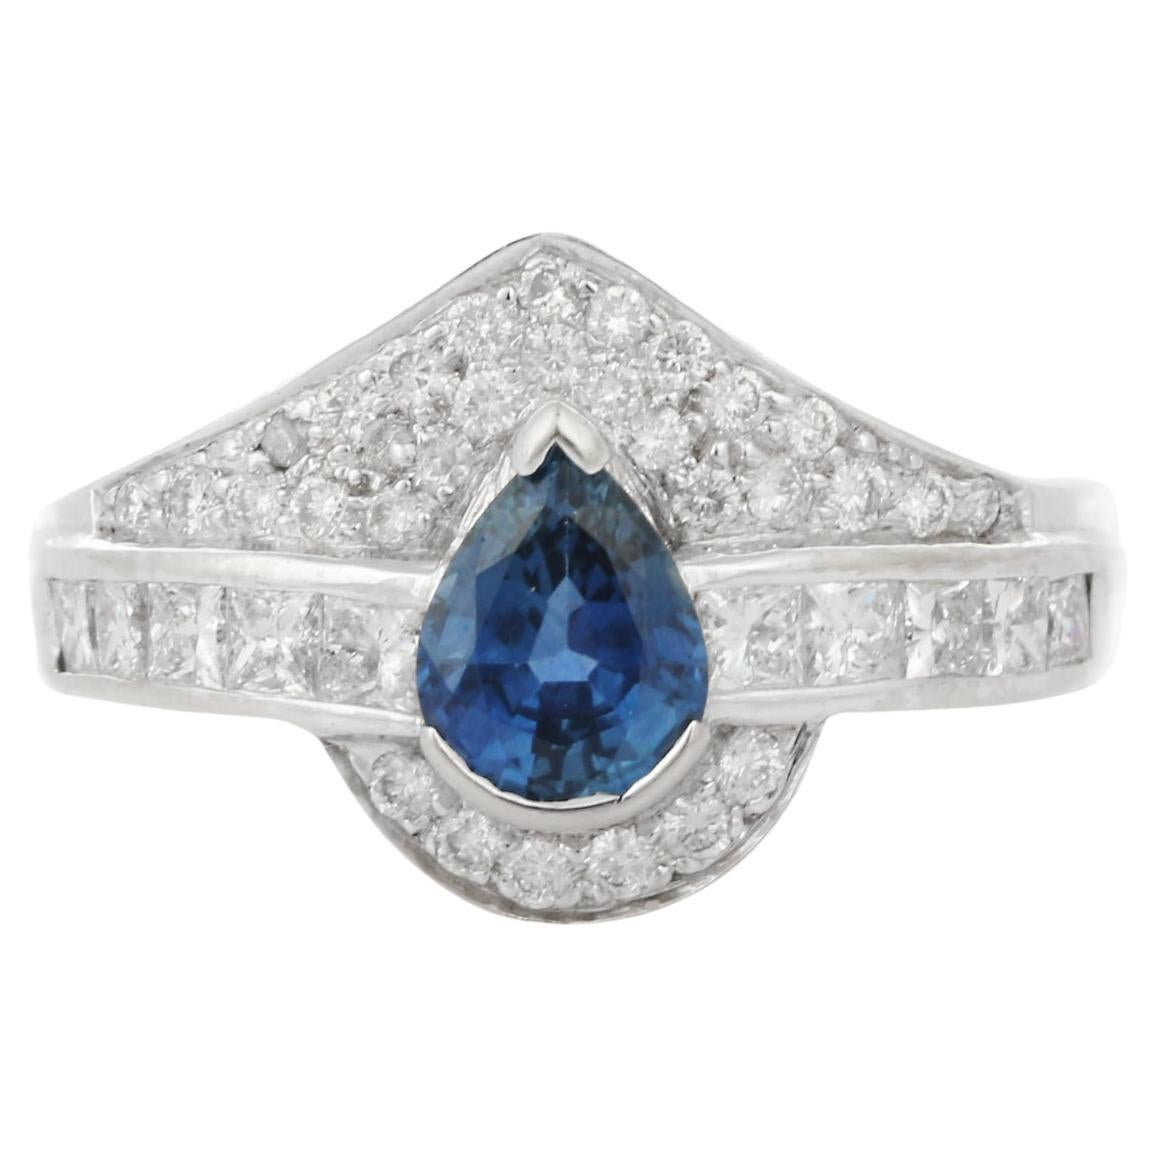 Regal Pear Cut Sapphire Diamond Wedding Ring in 18K White Gold